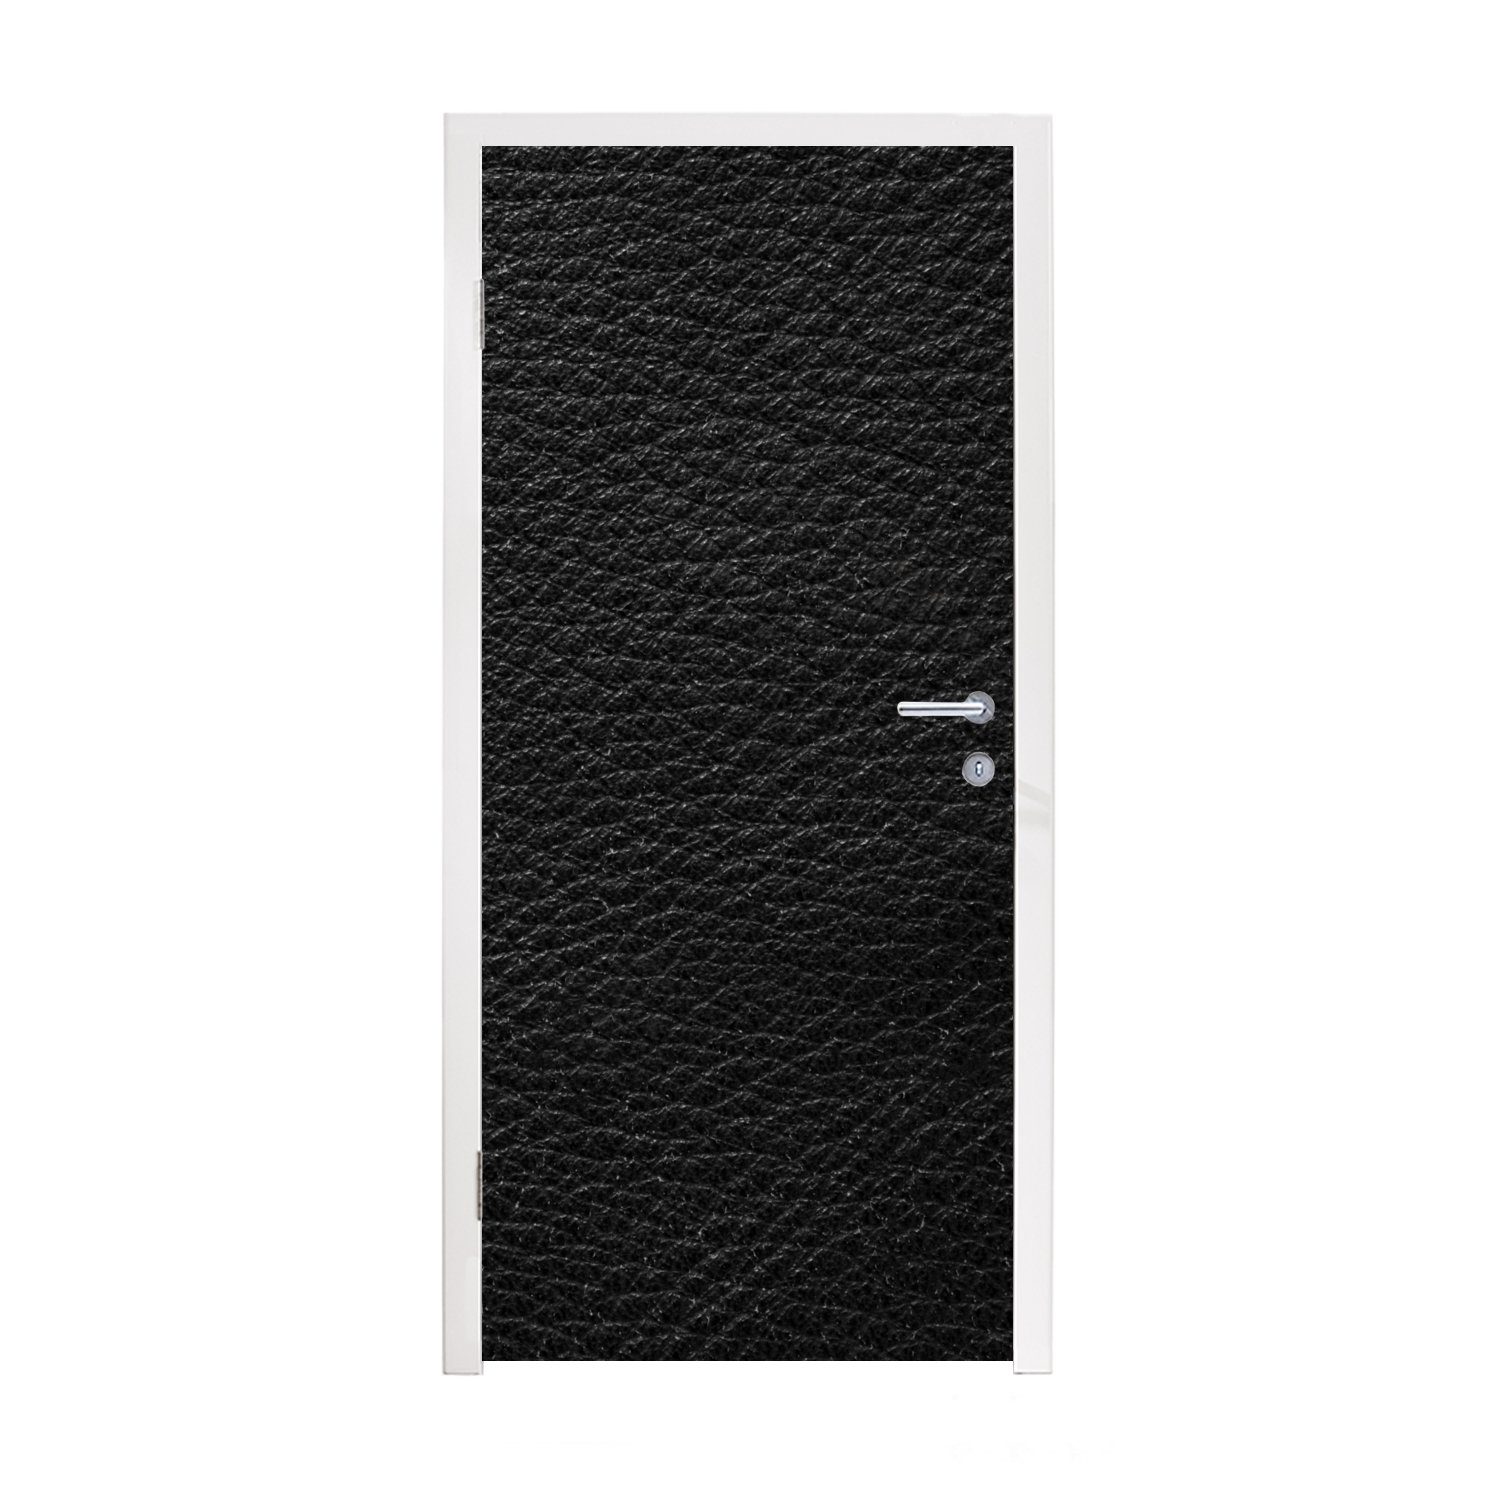 MuchoWow Türtapete Leder - Lederoptik - Schwarz - Grau, Matt, bedruckt, (1 St), Fototapete für Tür, Türaufkleber, 75x205 cm